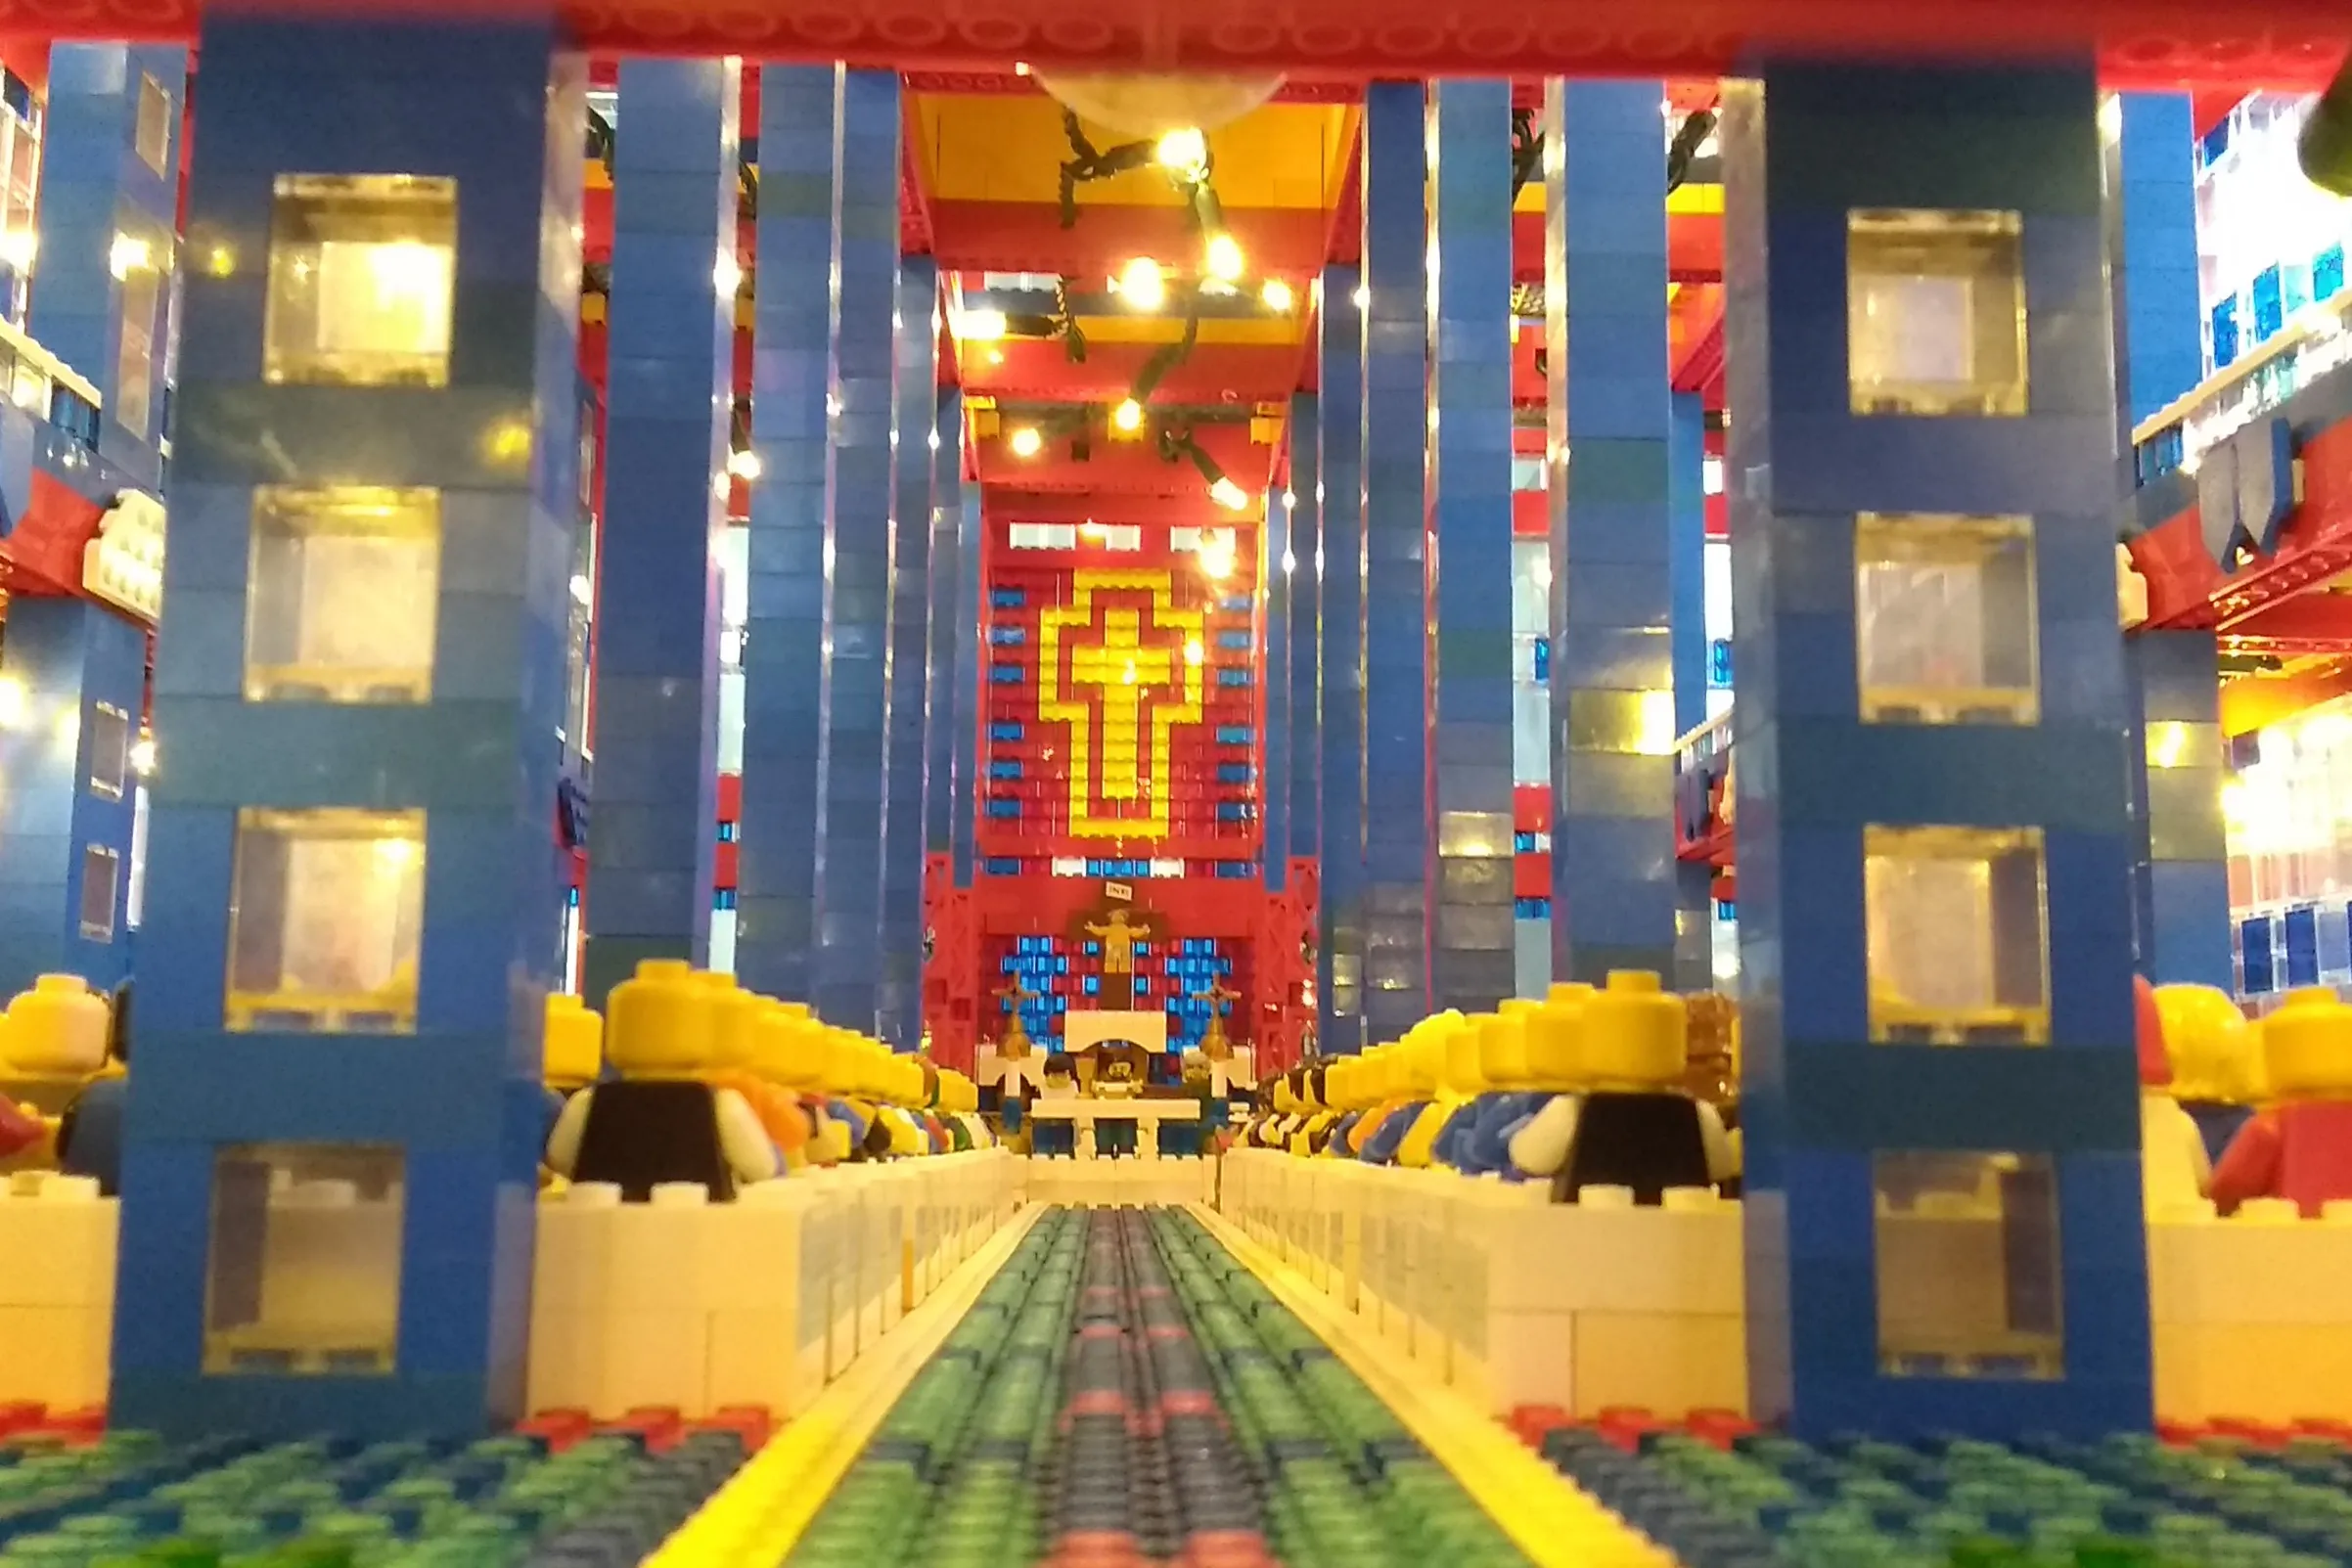 The interior of one of John Kraemer's Lego churches. John Kraemer